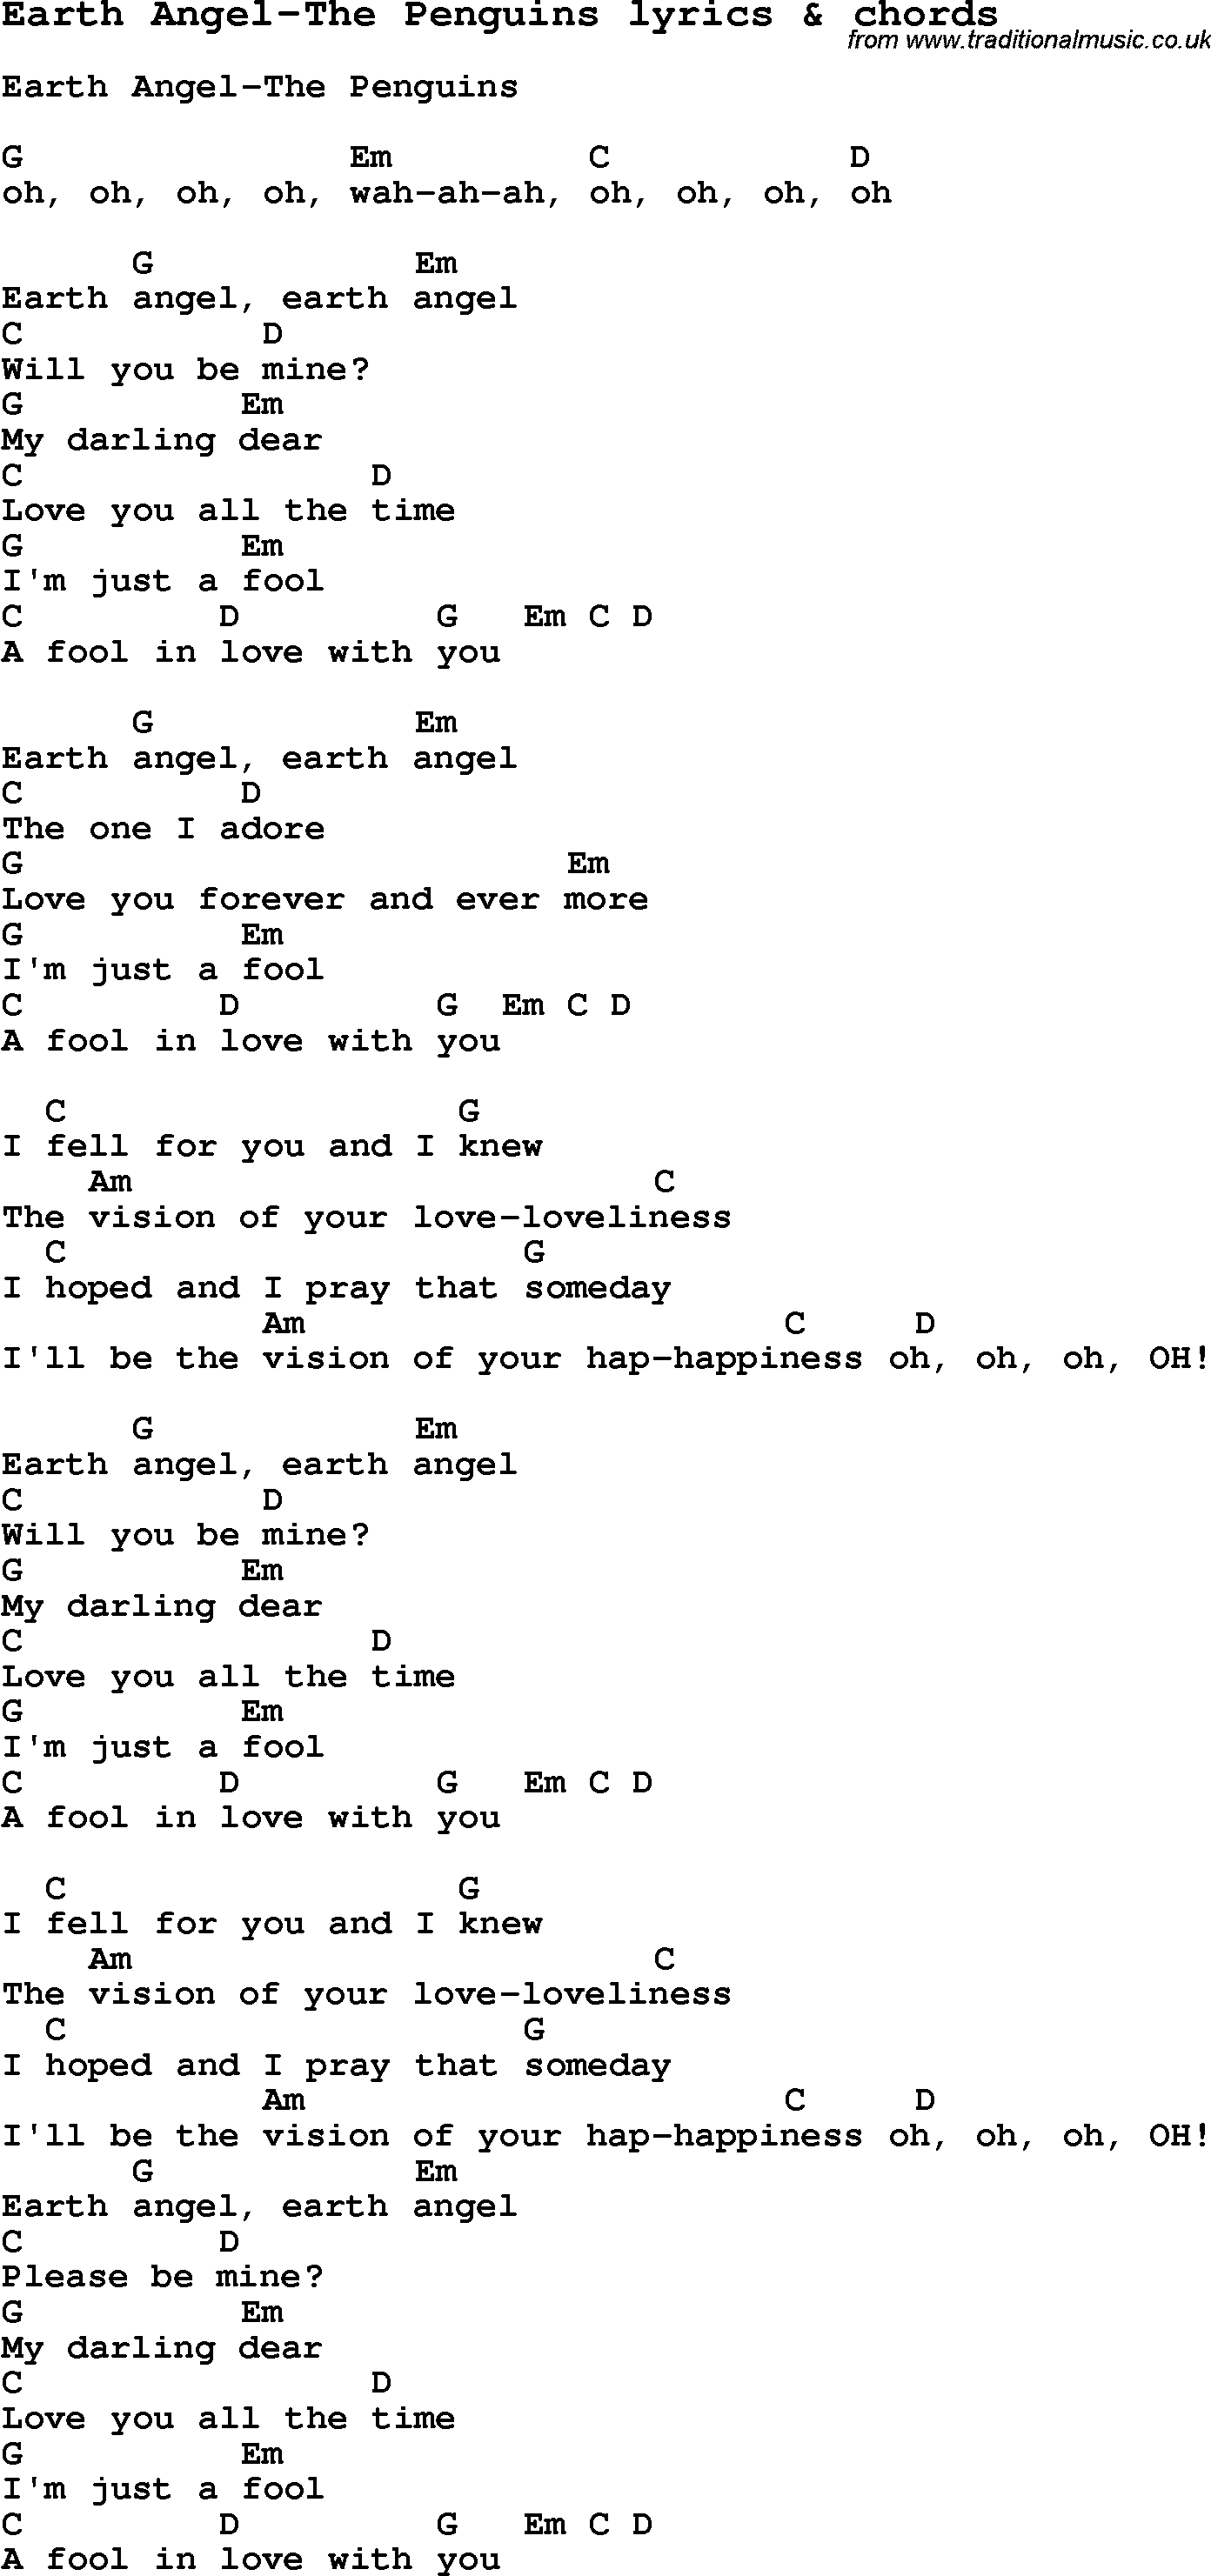 Love Song Lyrics for: Earth Angel-The Penguins with chords for Ukulele, Guitar Banjo etc.